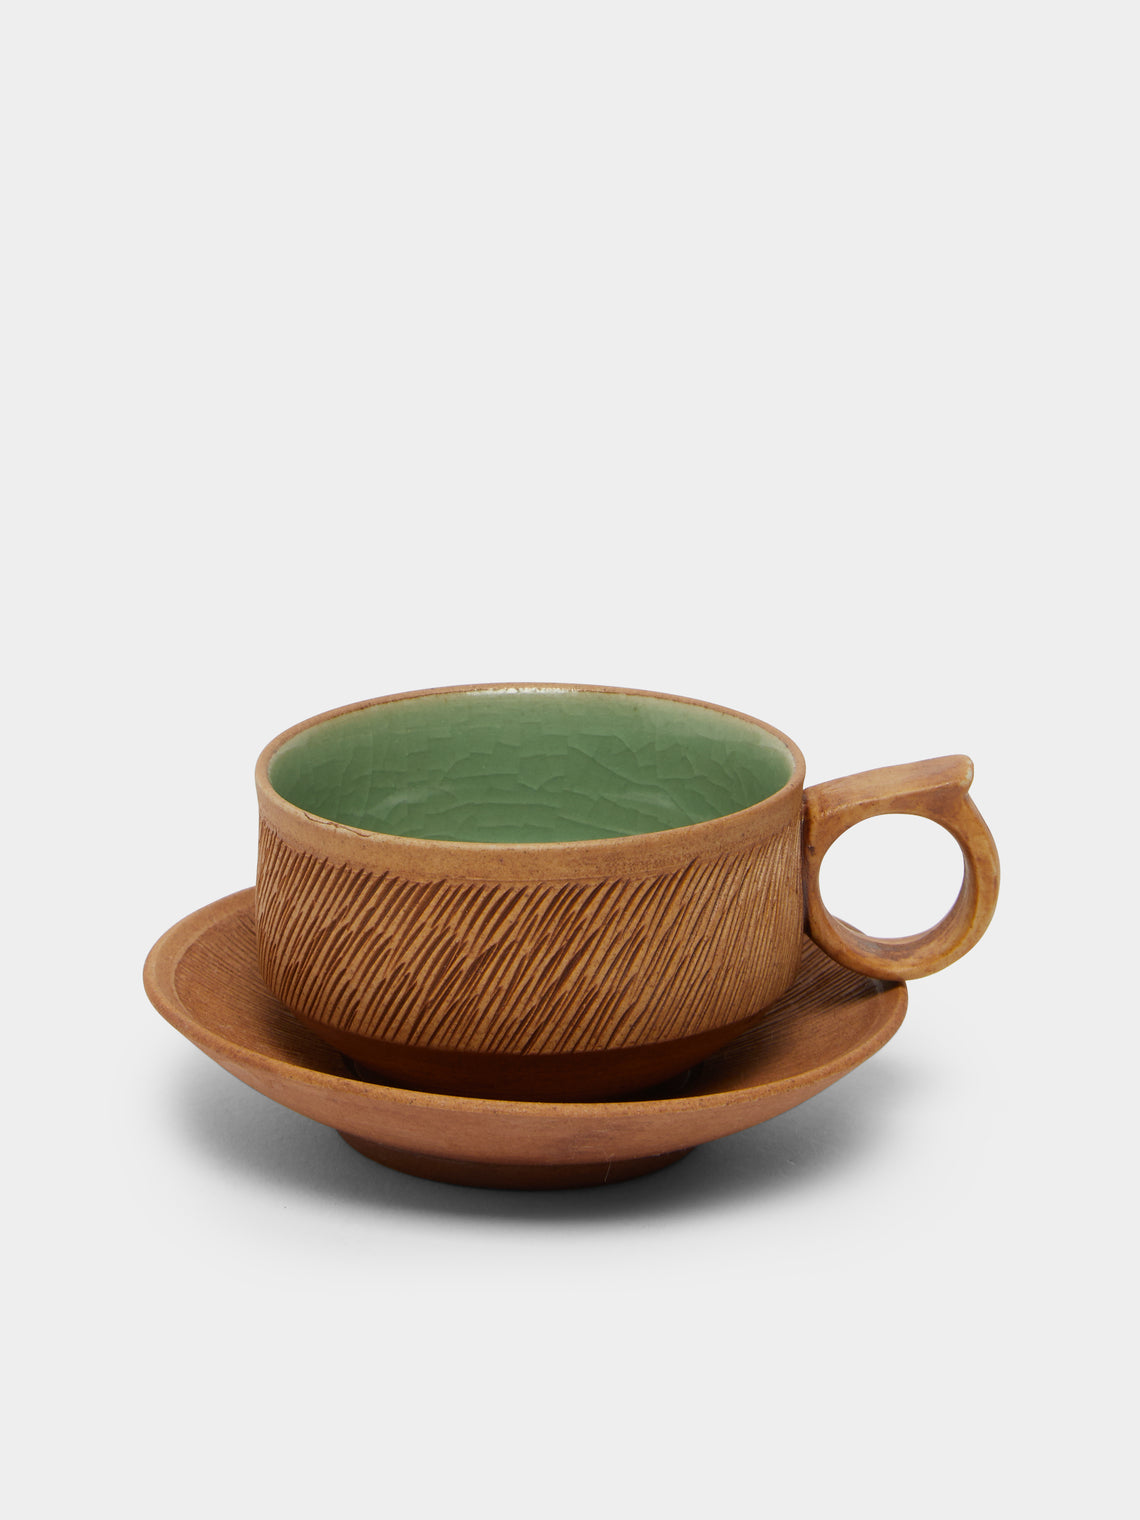 Kim Pan-ki - Comb Pattern Celadon Espresso Cup and Saucer -  - ABASK - 